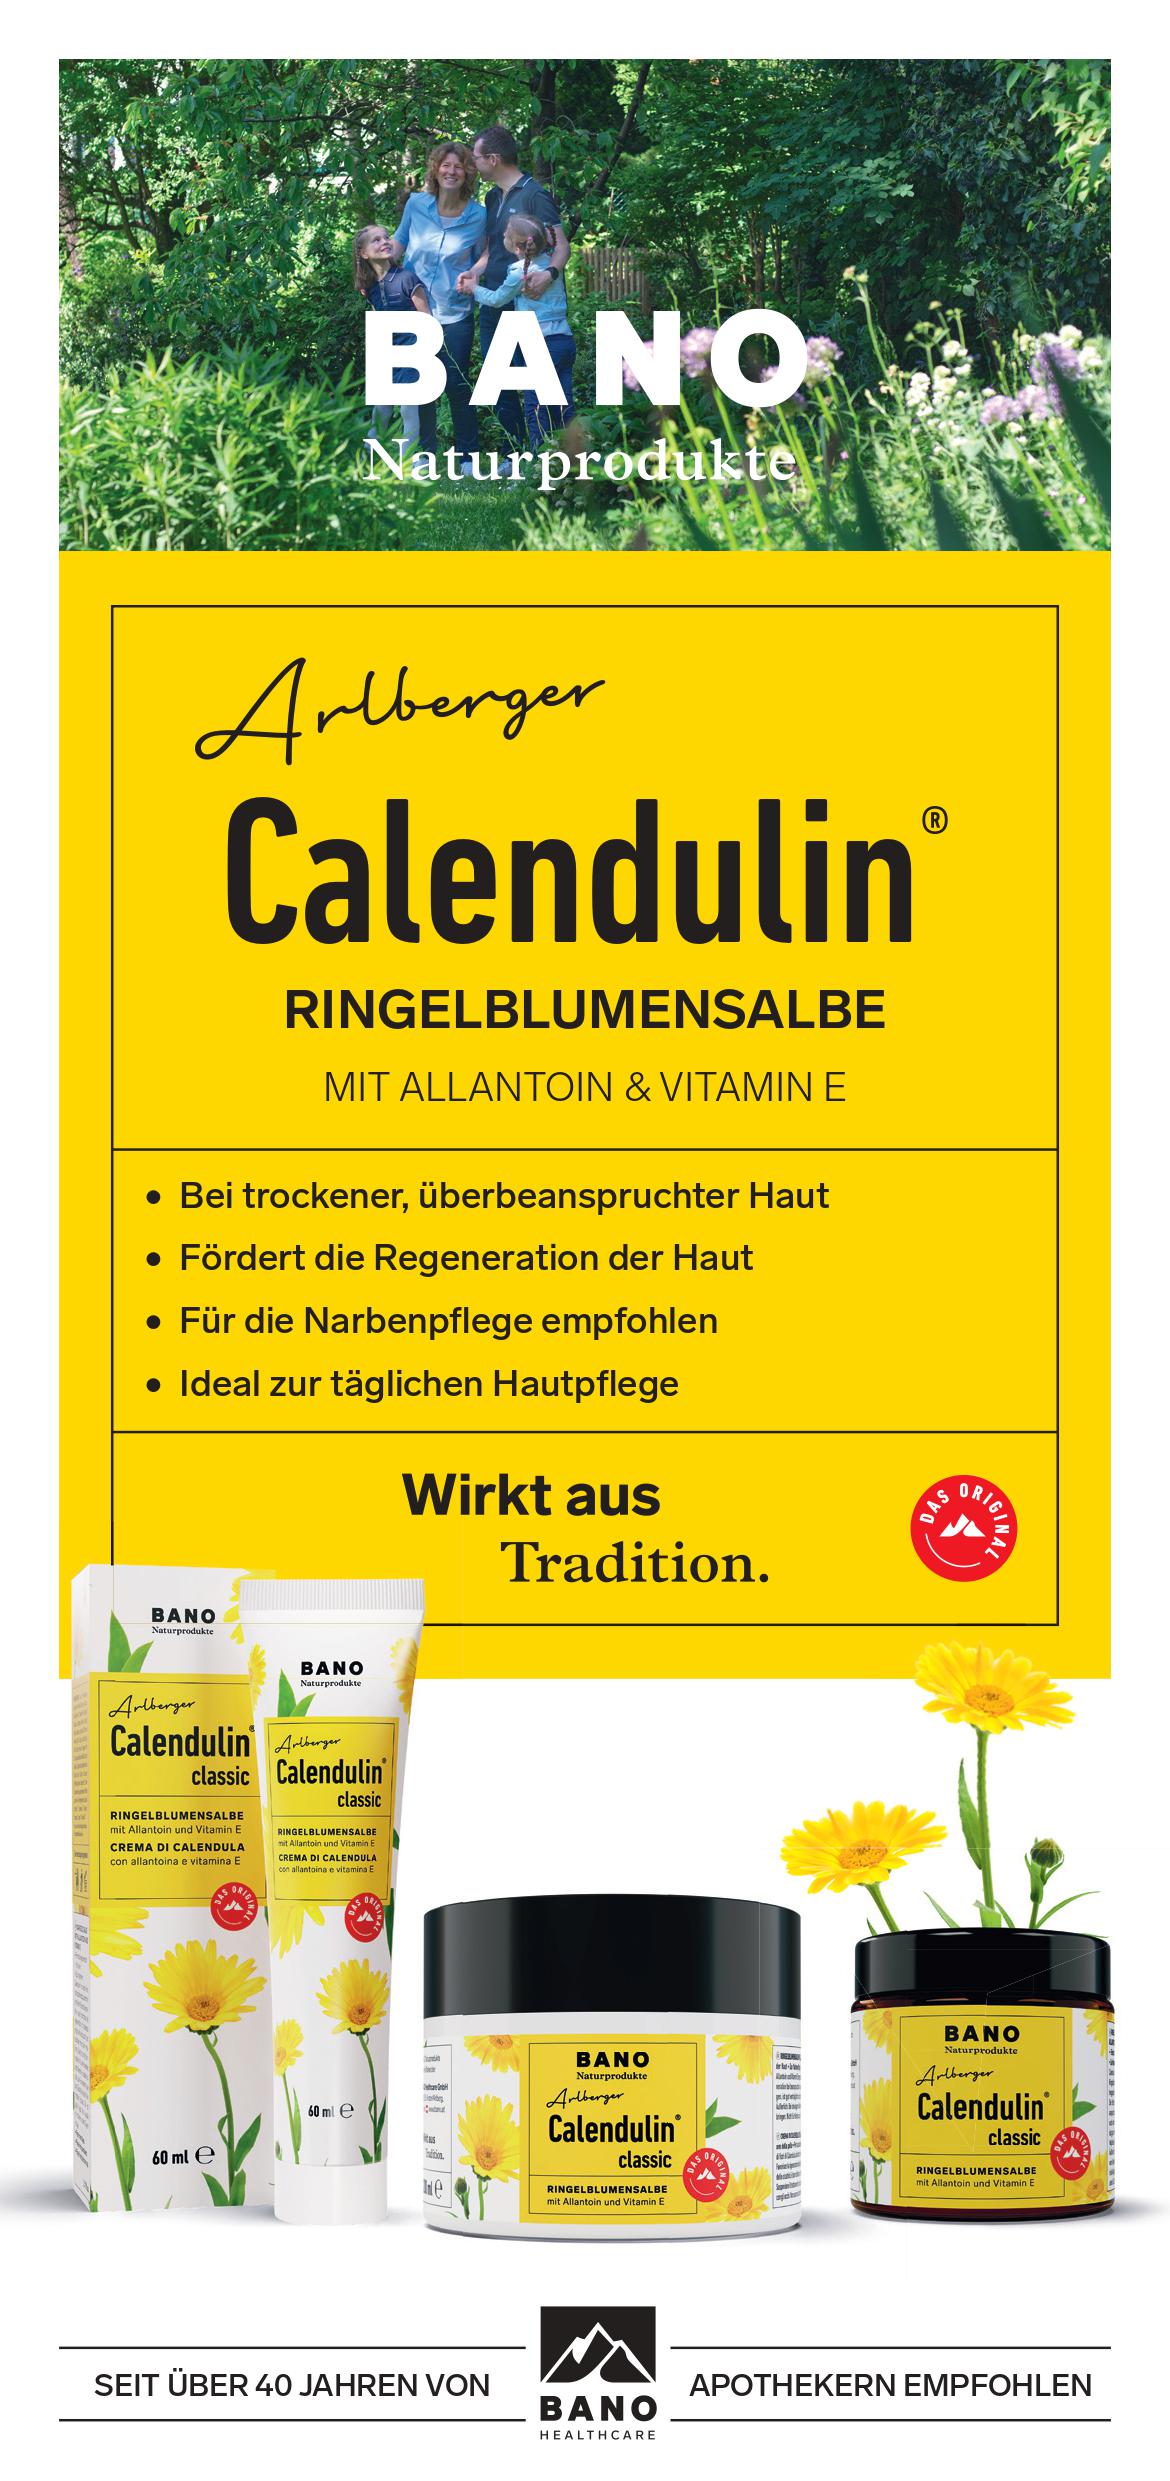 Arlberger Calendulin Classic Ringelblumensalbe